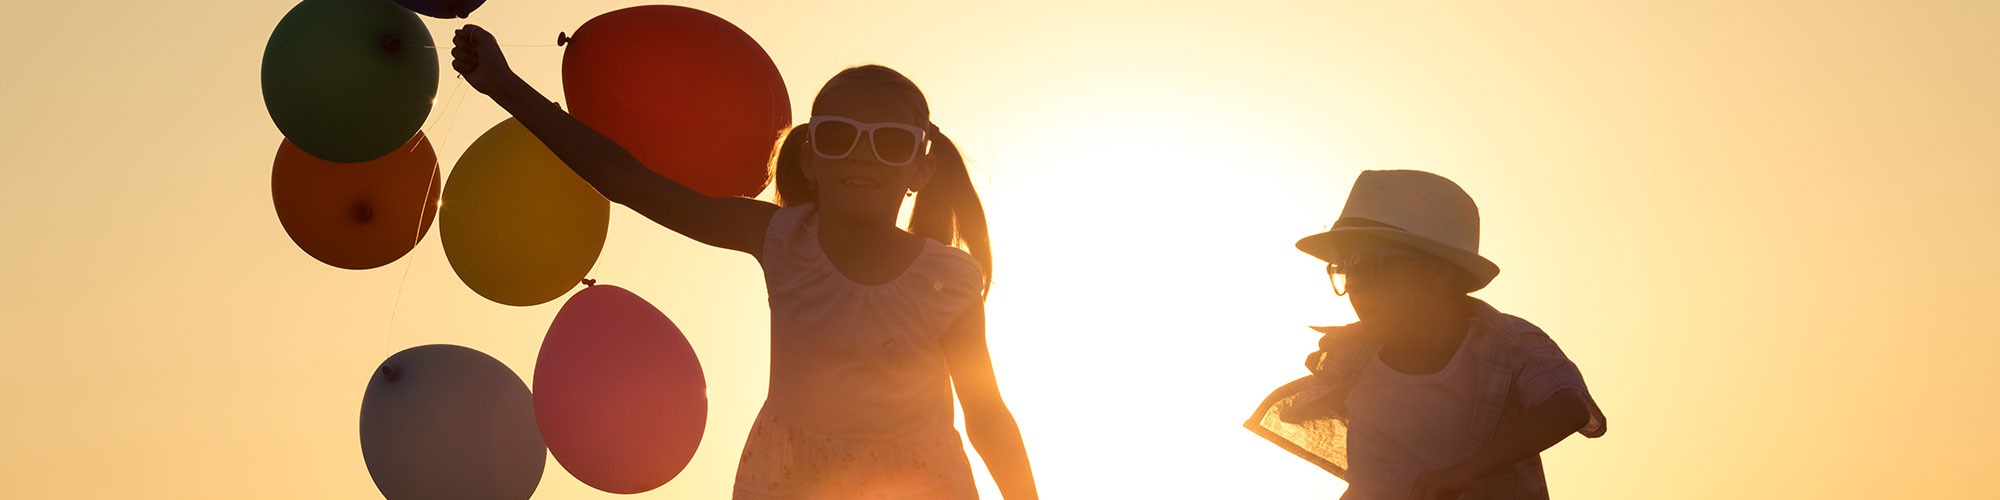 two children holding balloons in sunset